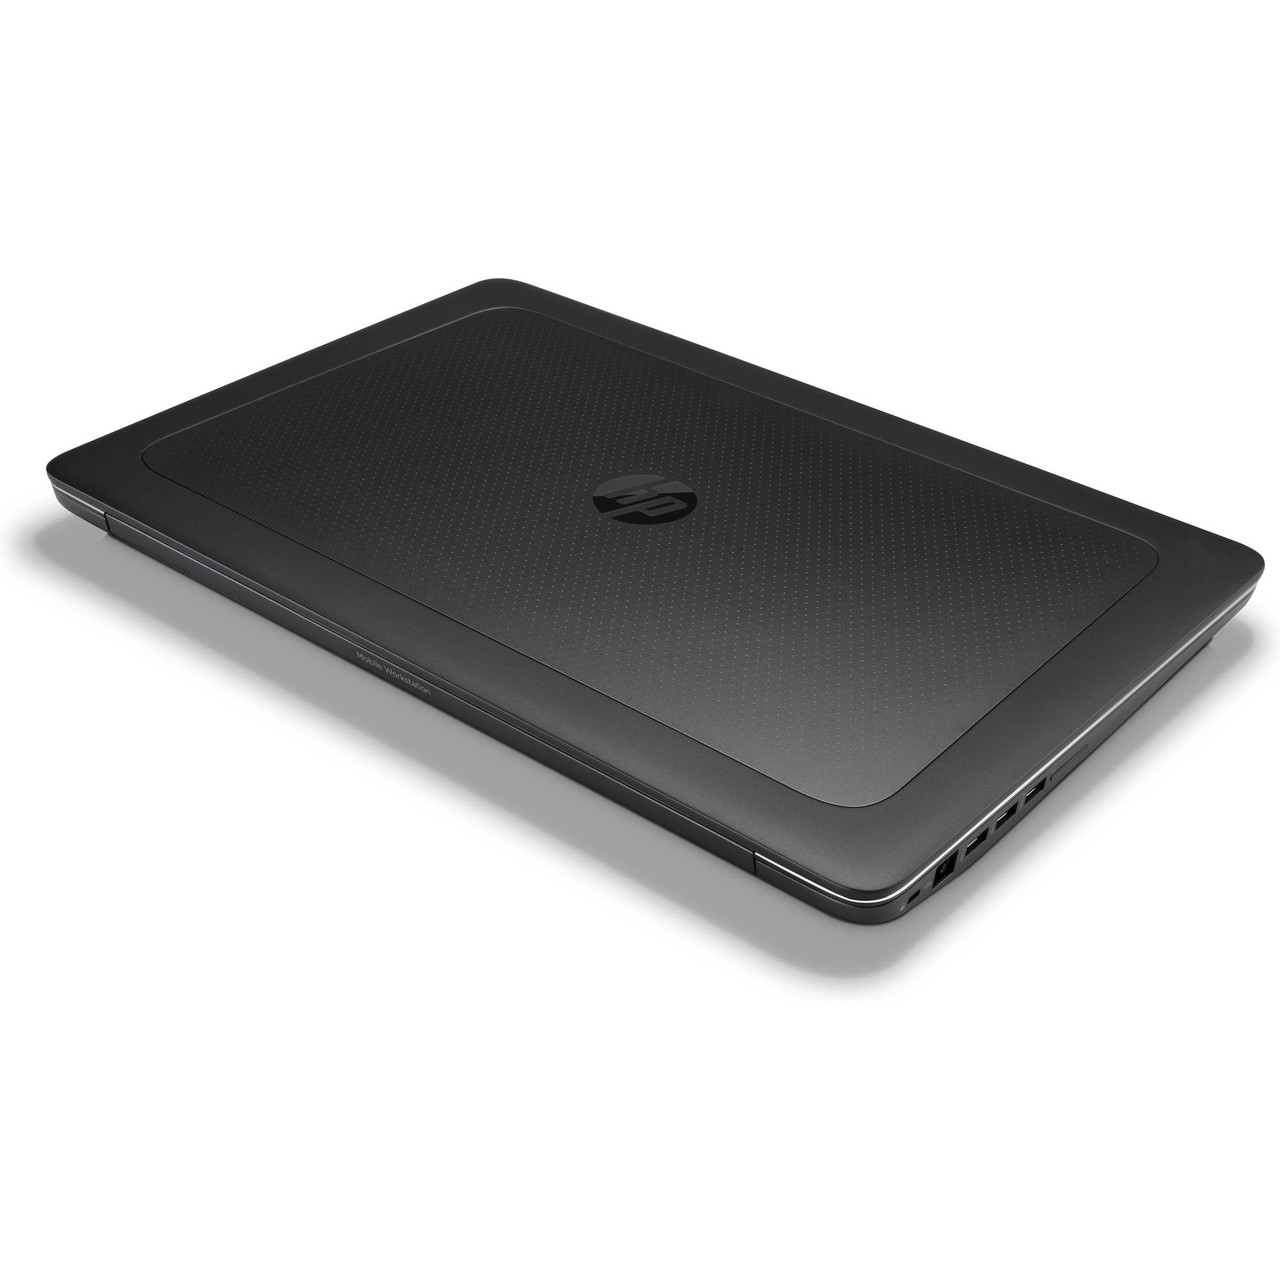 Hp Zbook 17 G3 Laptop Intel Core i7 2.70 GHz 8GB Ram 256GB SSD W10P | Refurbished